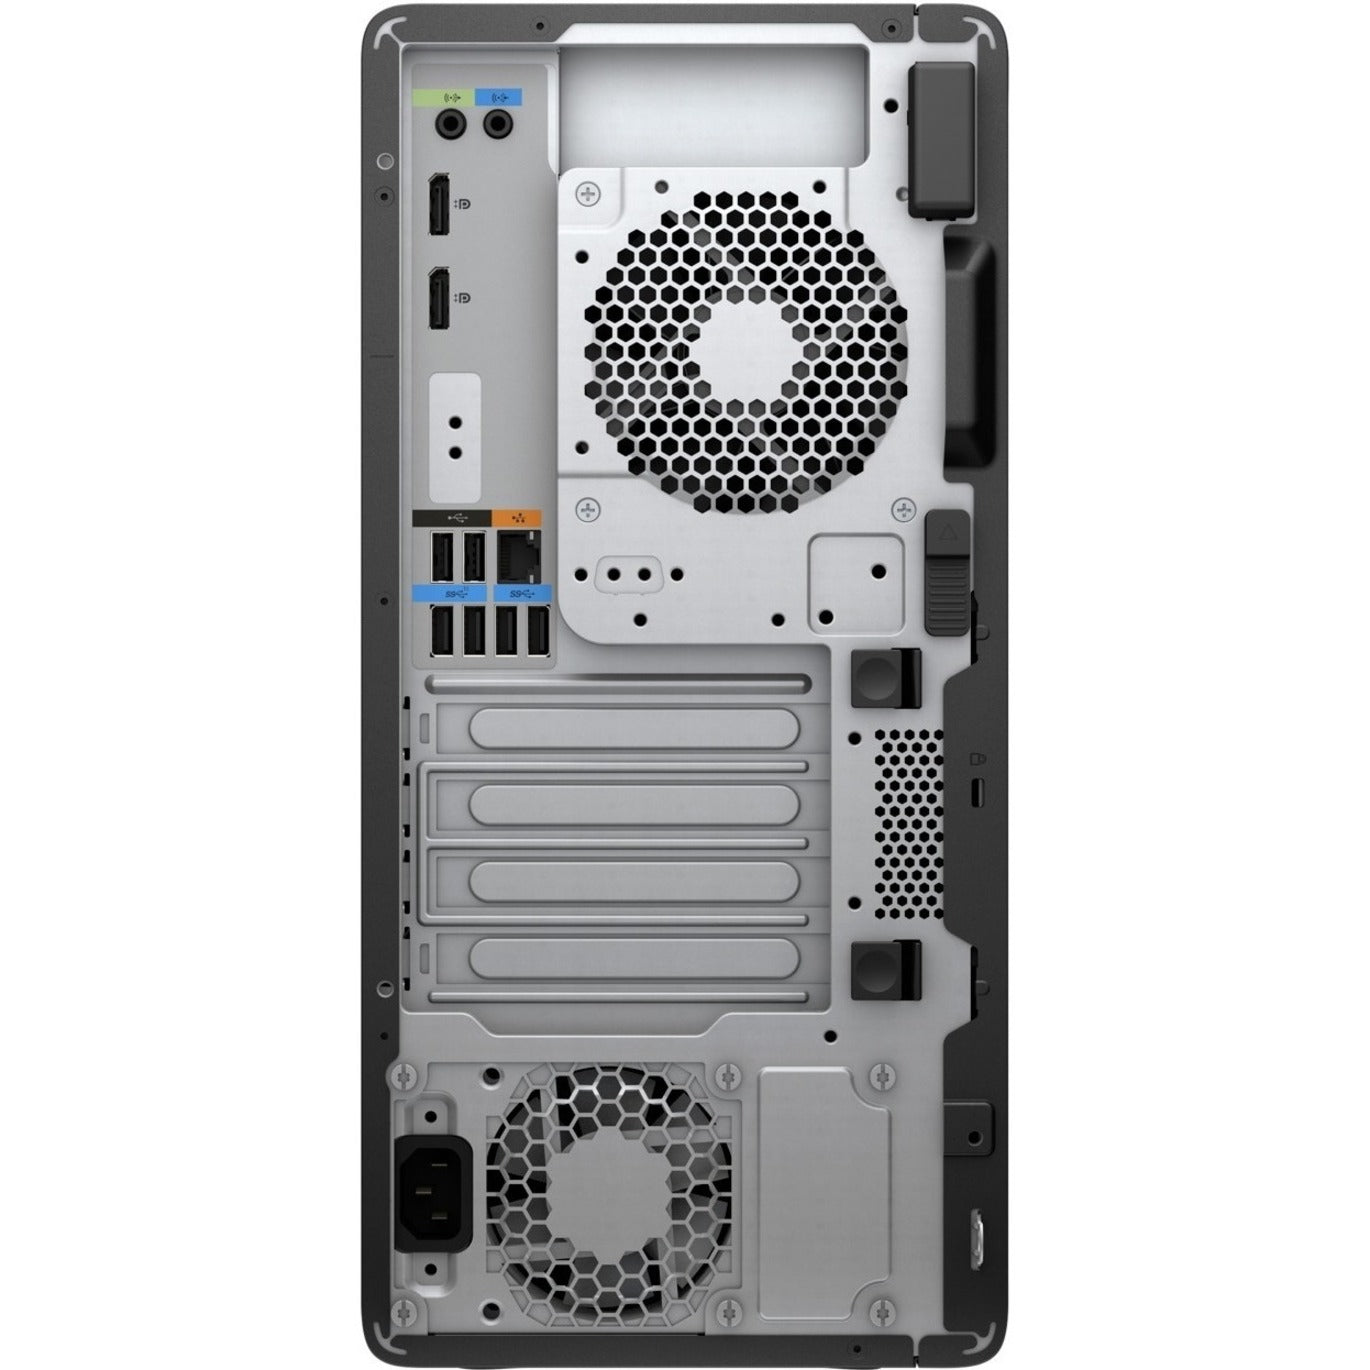 HP Z2 Tower G5 Workstation, Intel Core i7 Octa-core, 32GB RAM, 512GB SSD, Windows 11 Pro